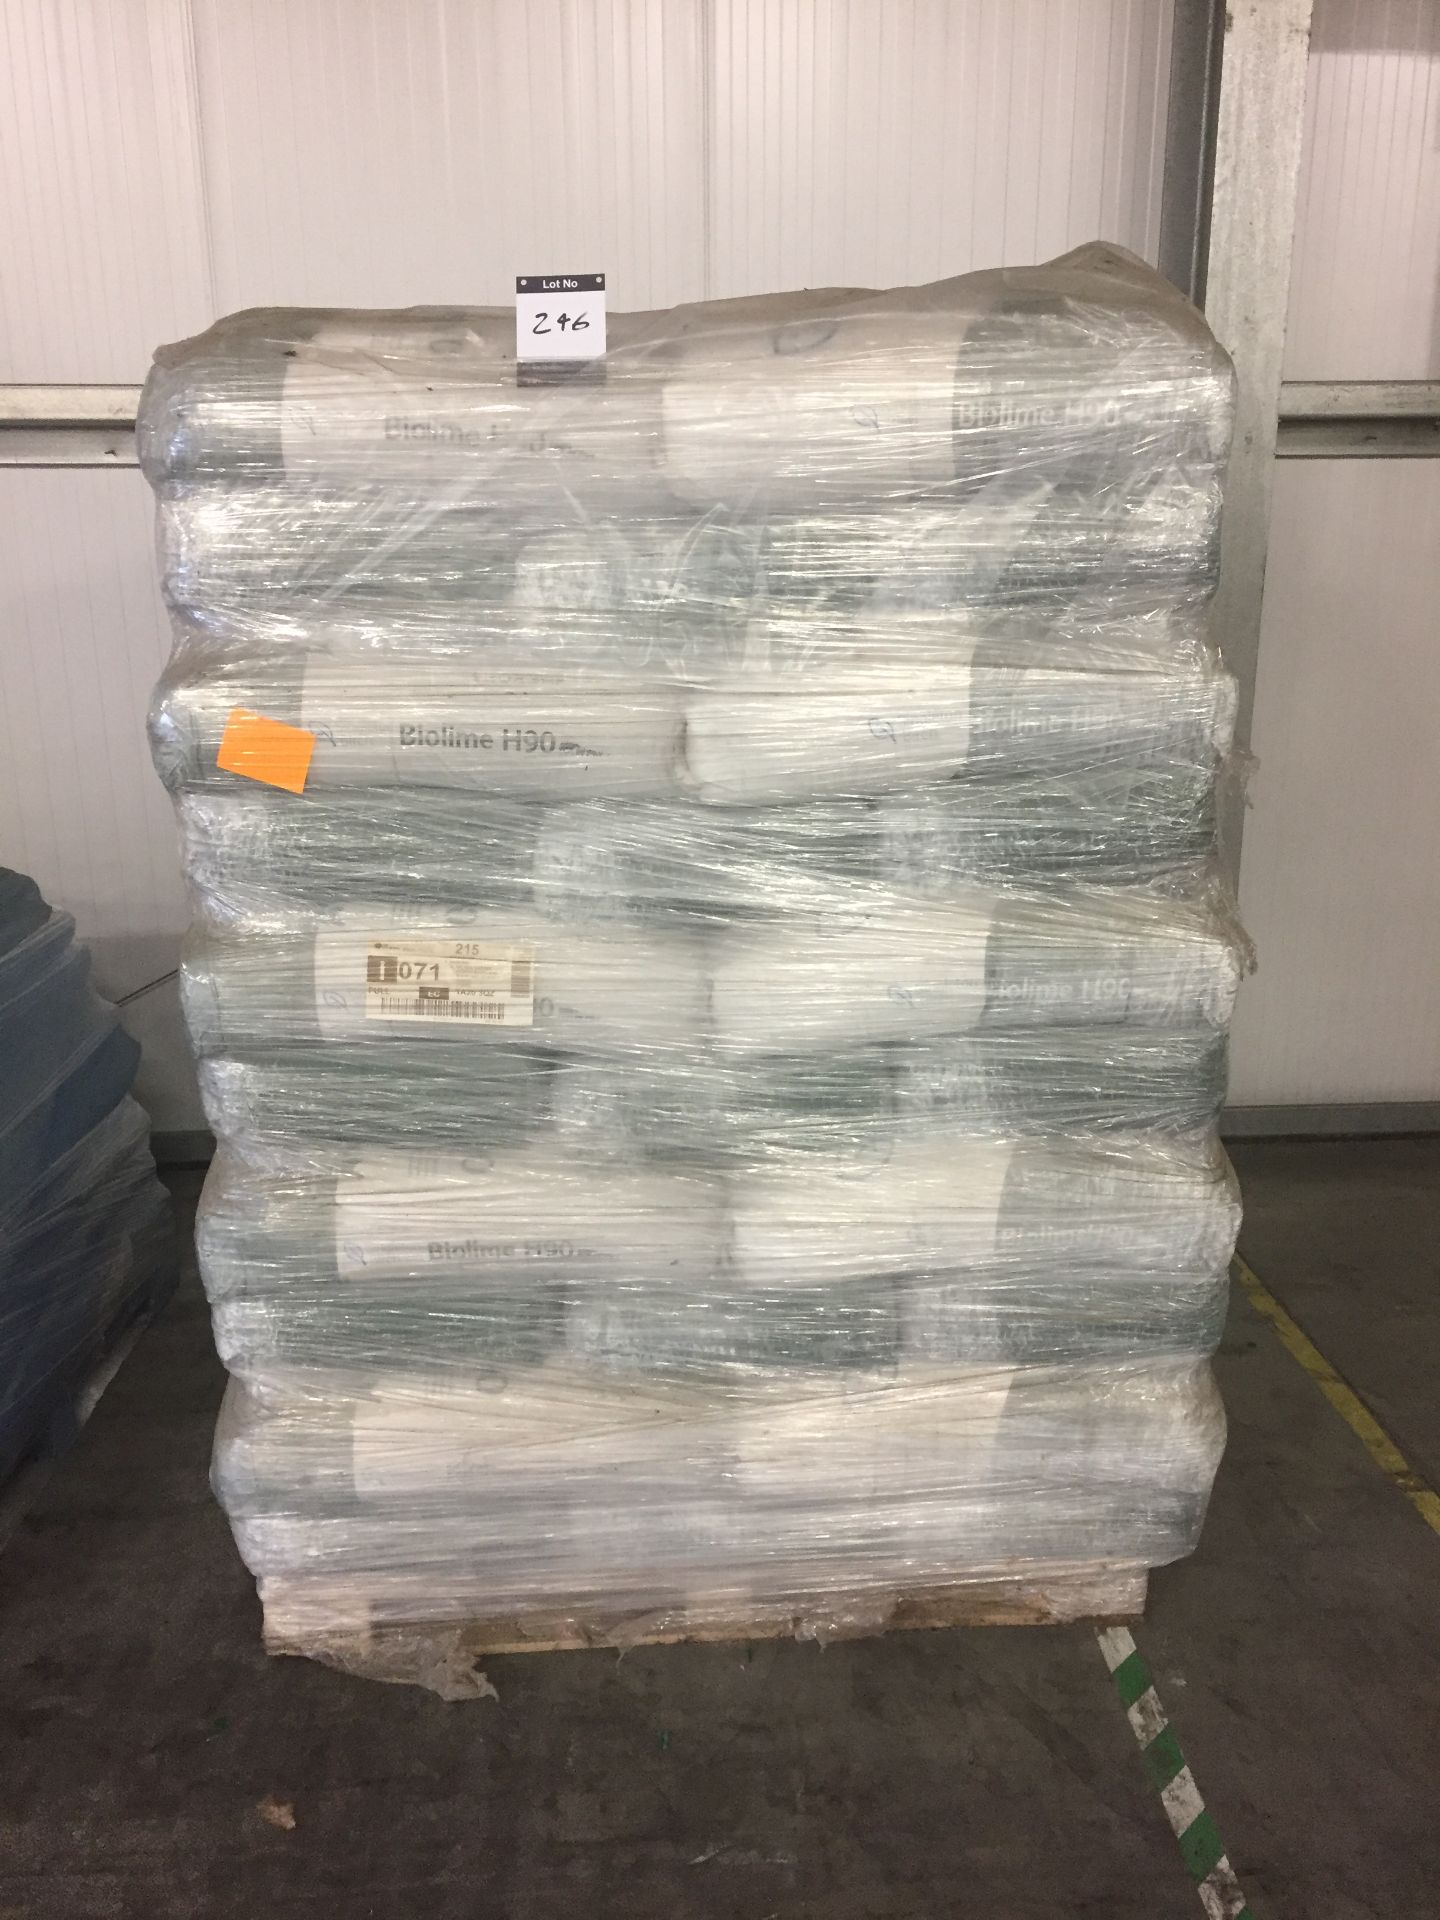 Pallet of 50 bags of Bioline H90